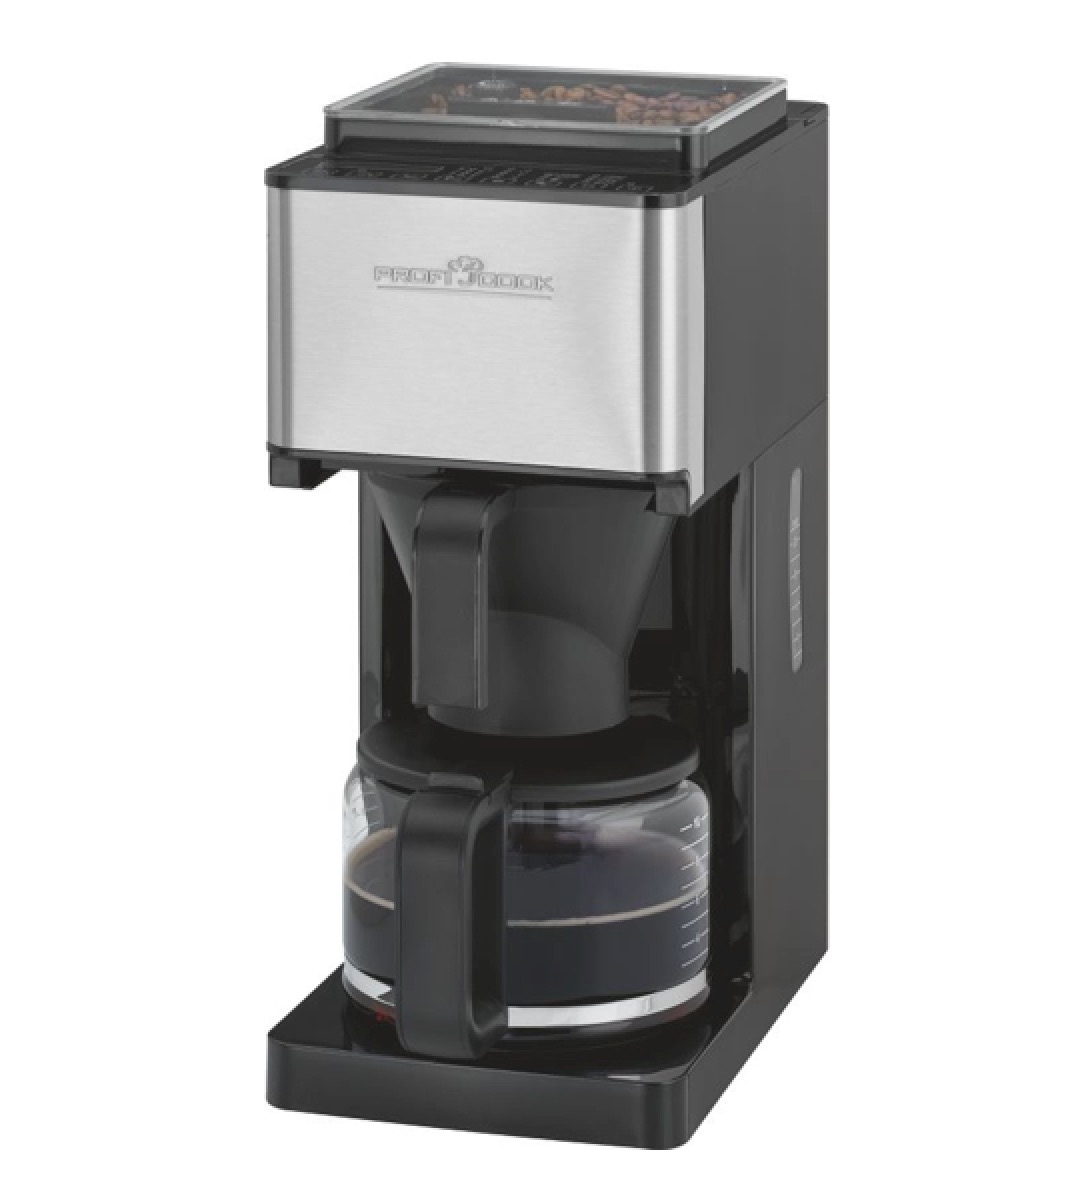 Profi Cook PC-KA 1138 Kaffeemaschine mit Mahlwerk für nur 94,- Euro inkl. Versand